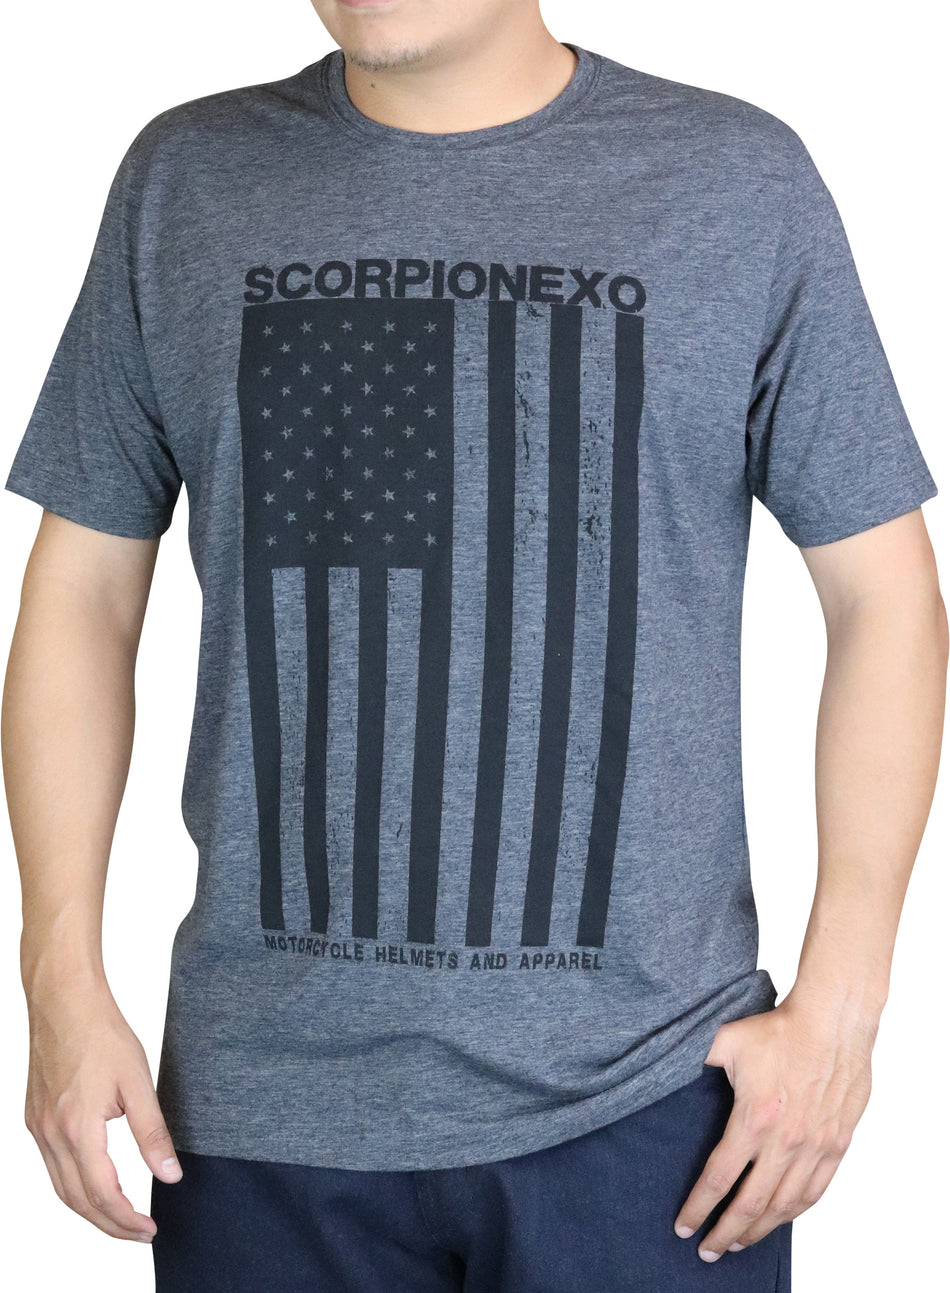 SCORPION EXO Americana Shirt Black/Charcoal Sm 61-750-03